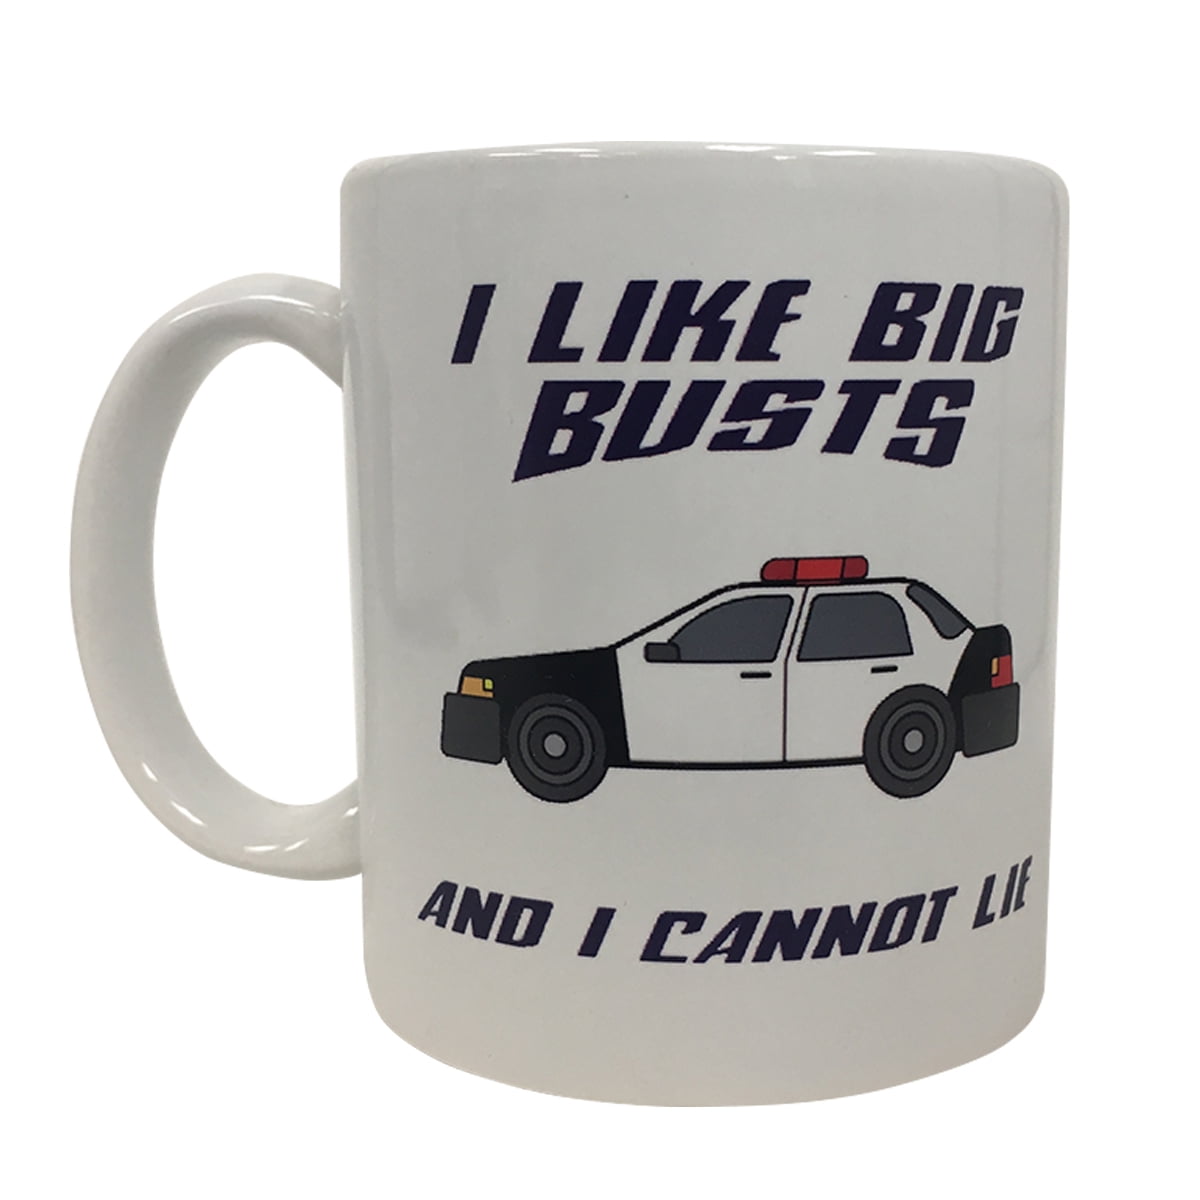 Police Officer Mug Female Officer Funny Mug Funny Mug Cop Gifts Funny Police Gift Police Academy Gift Cop Mug